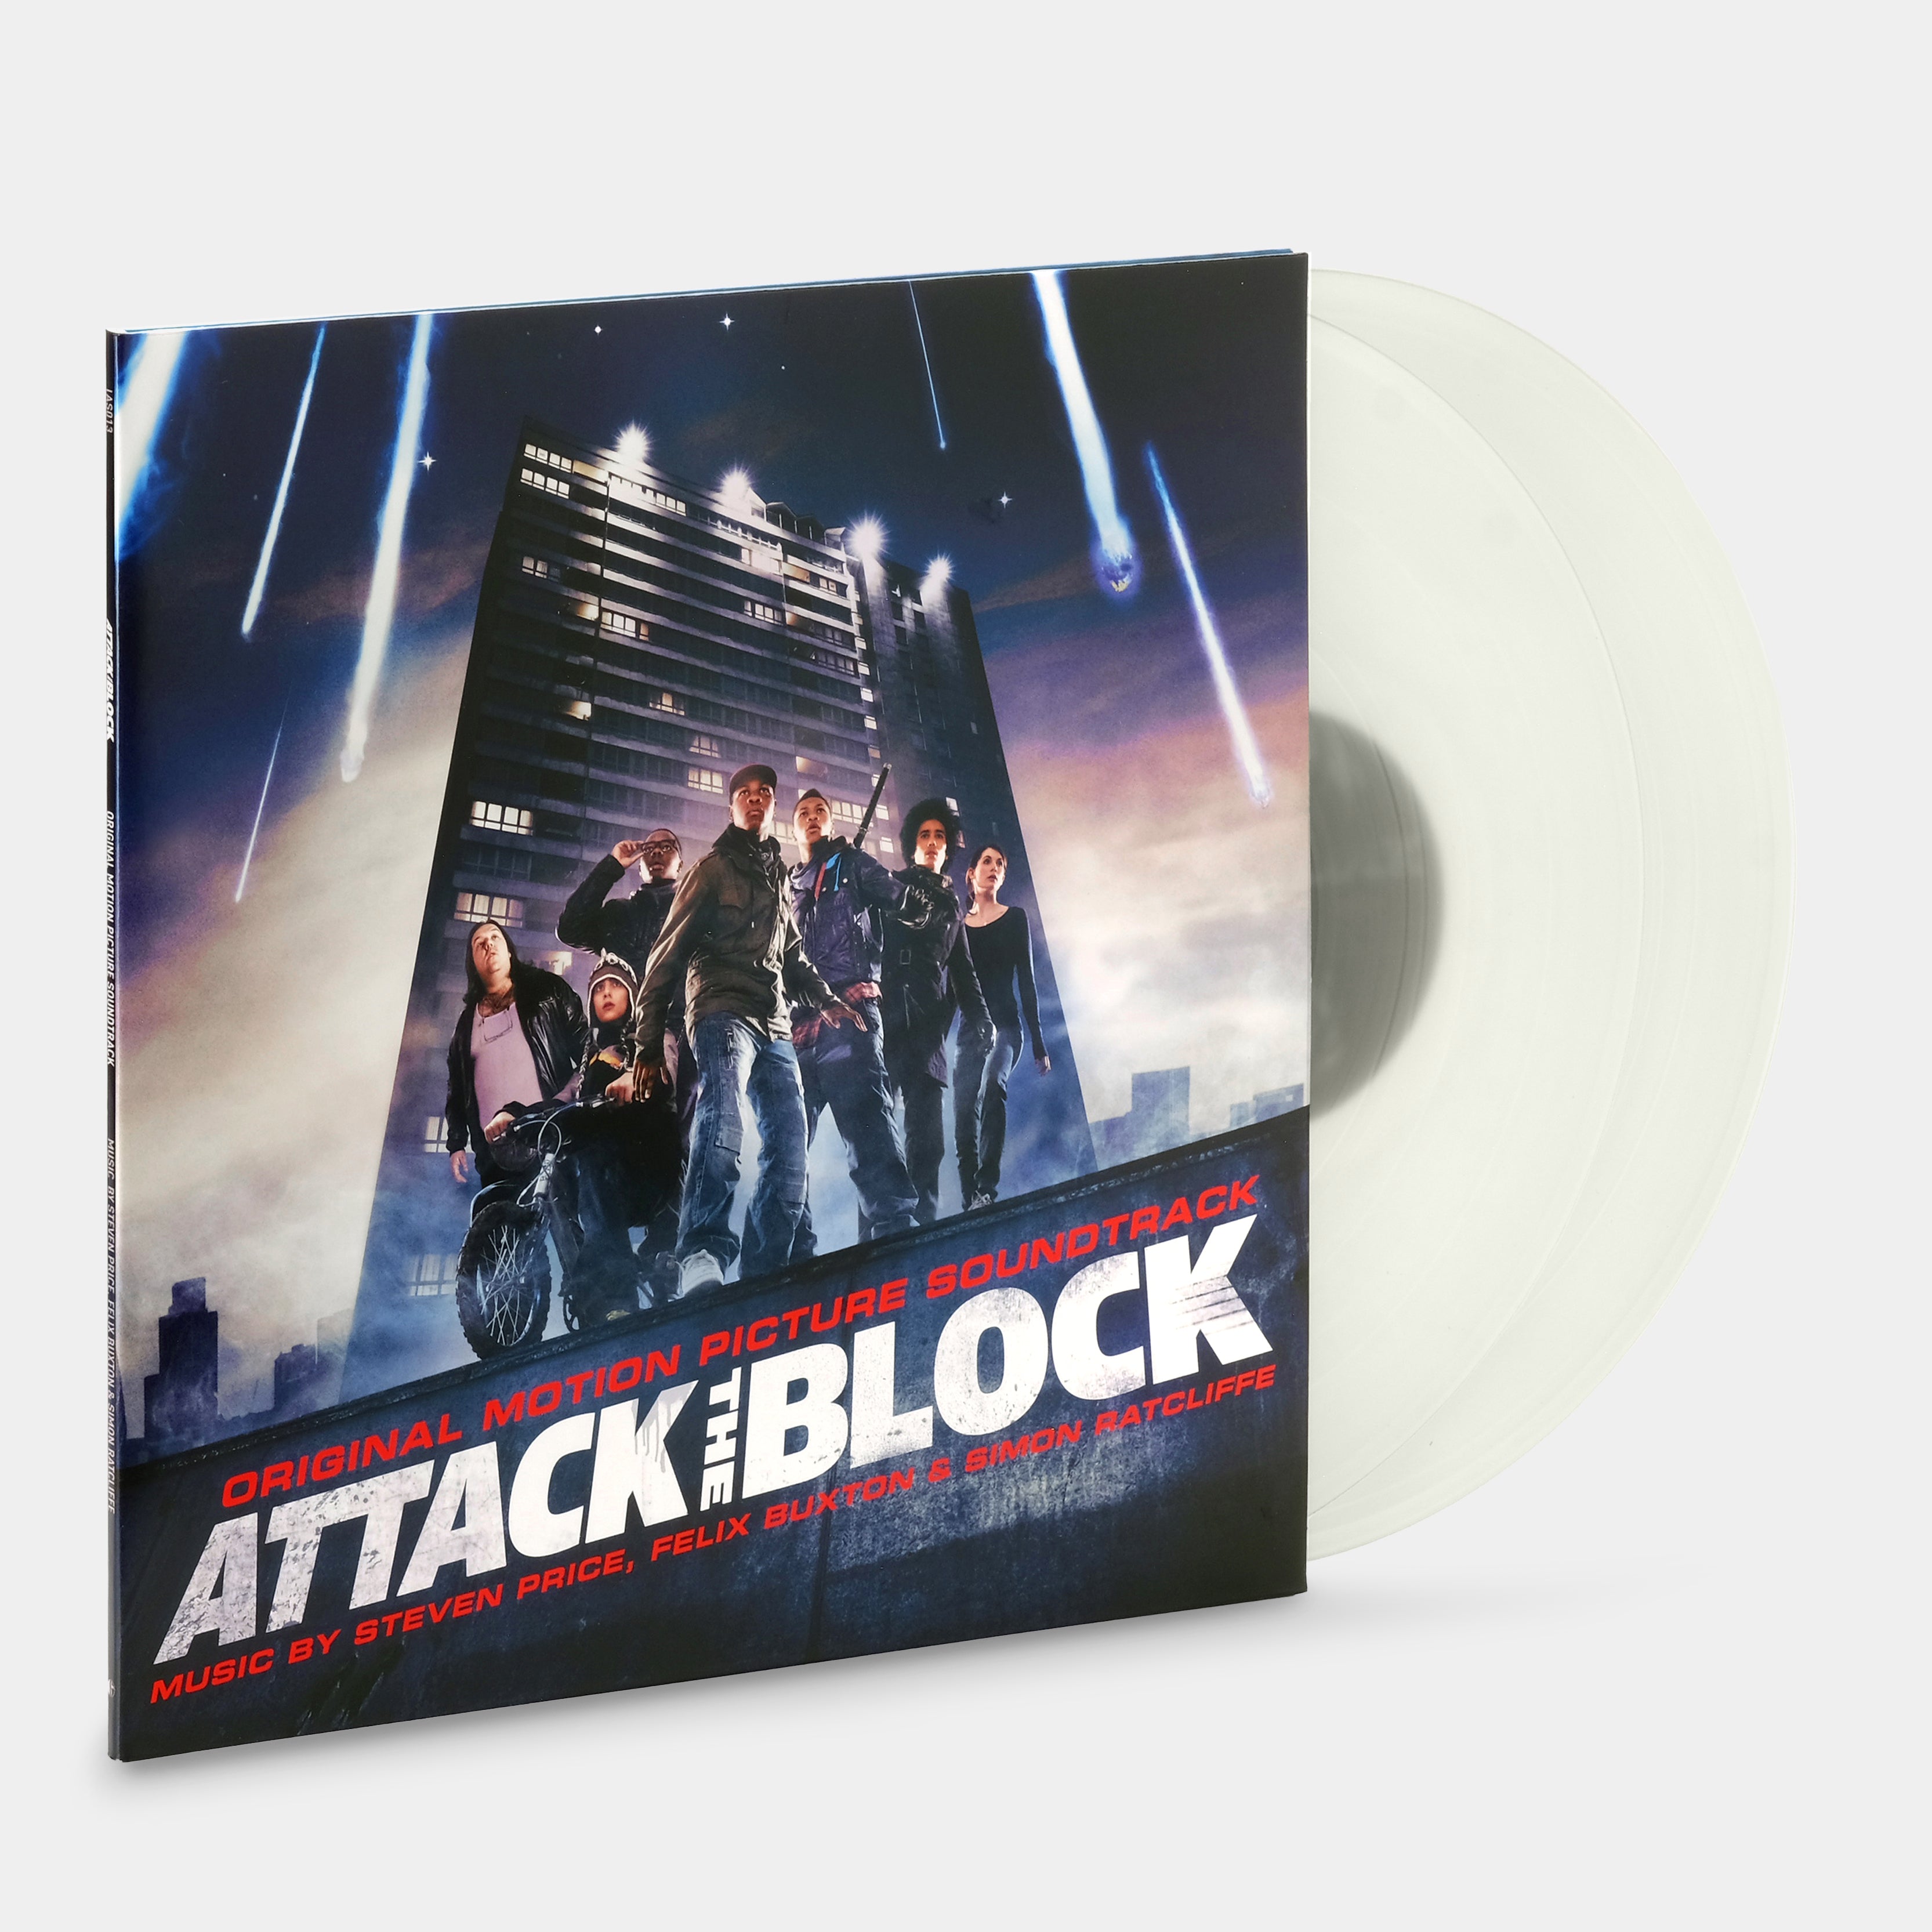 Steven Price, Felix Buxton and Simon Ratcliffe - Attack The Block (Original Motion Picture Soundtrack) 2xLP Glow In The Dark Vinyl Record